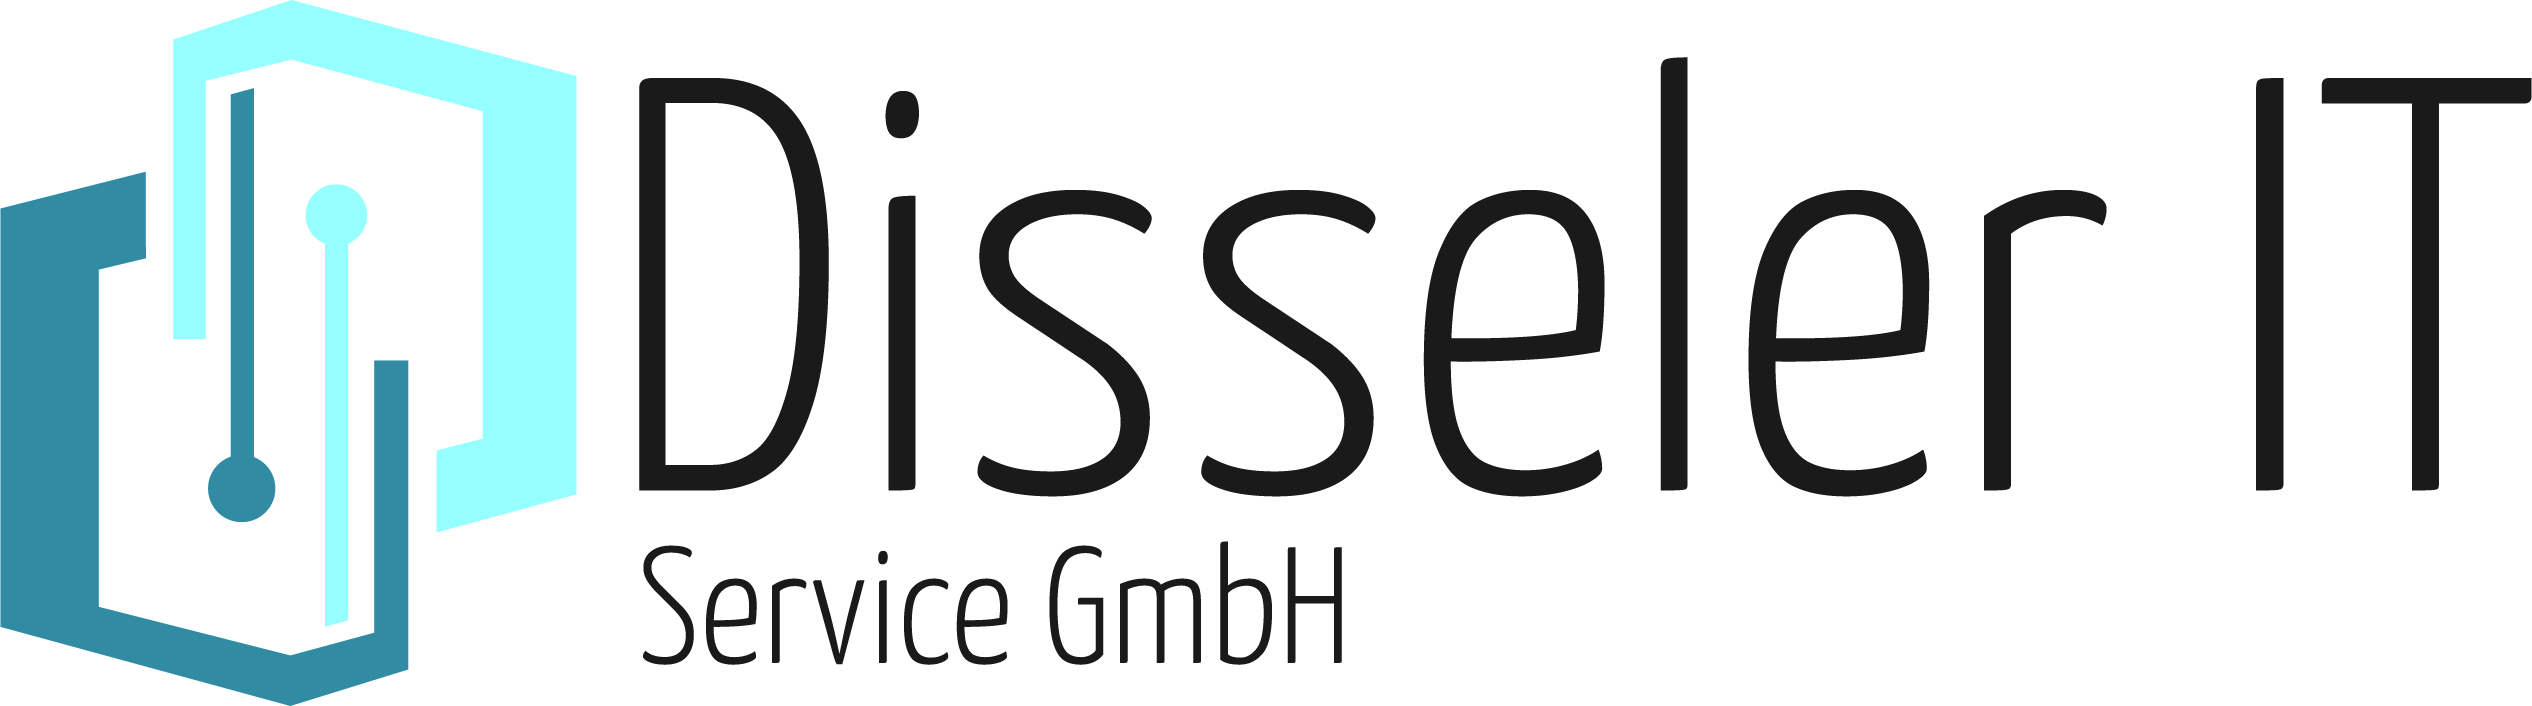 Disseler IT Service GmbH